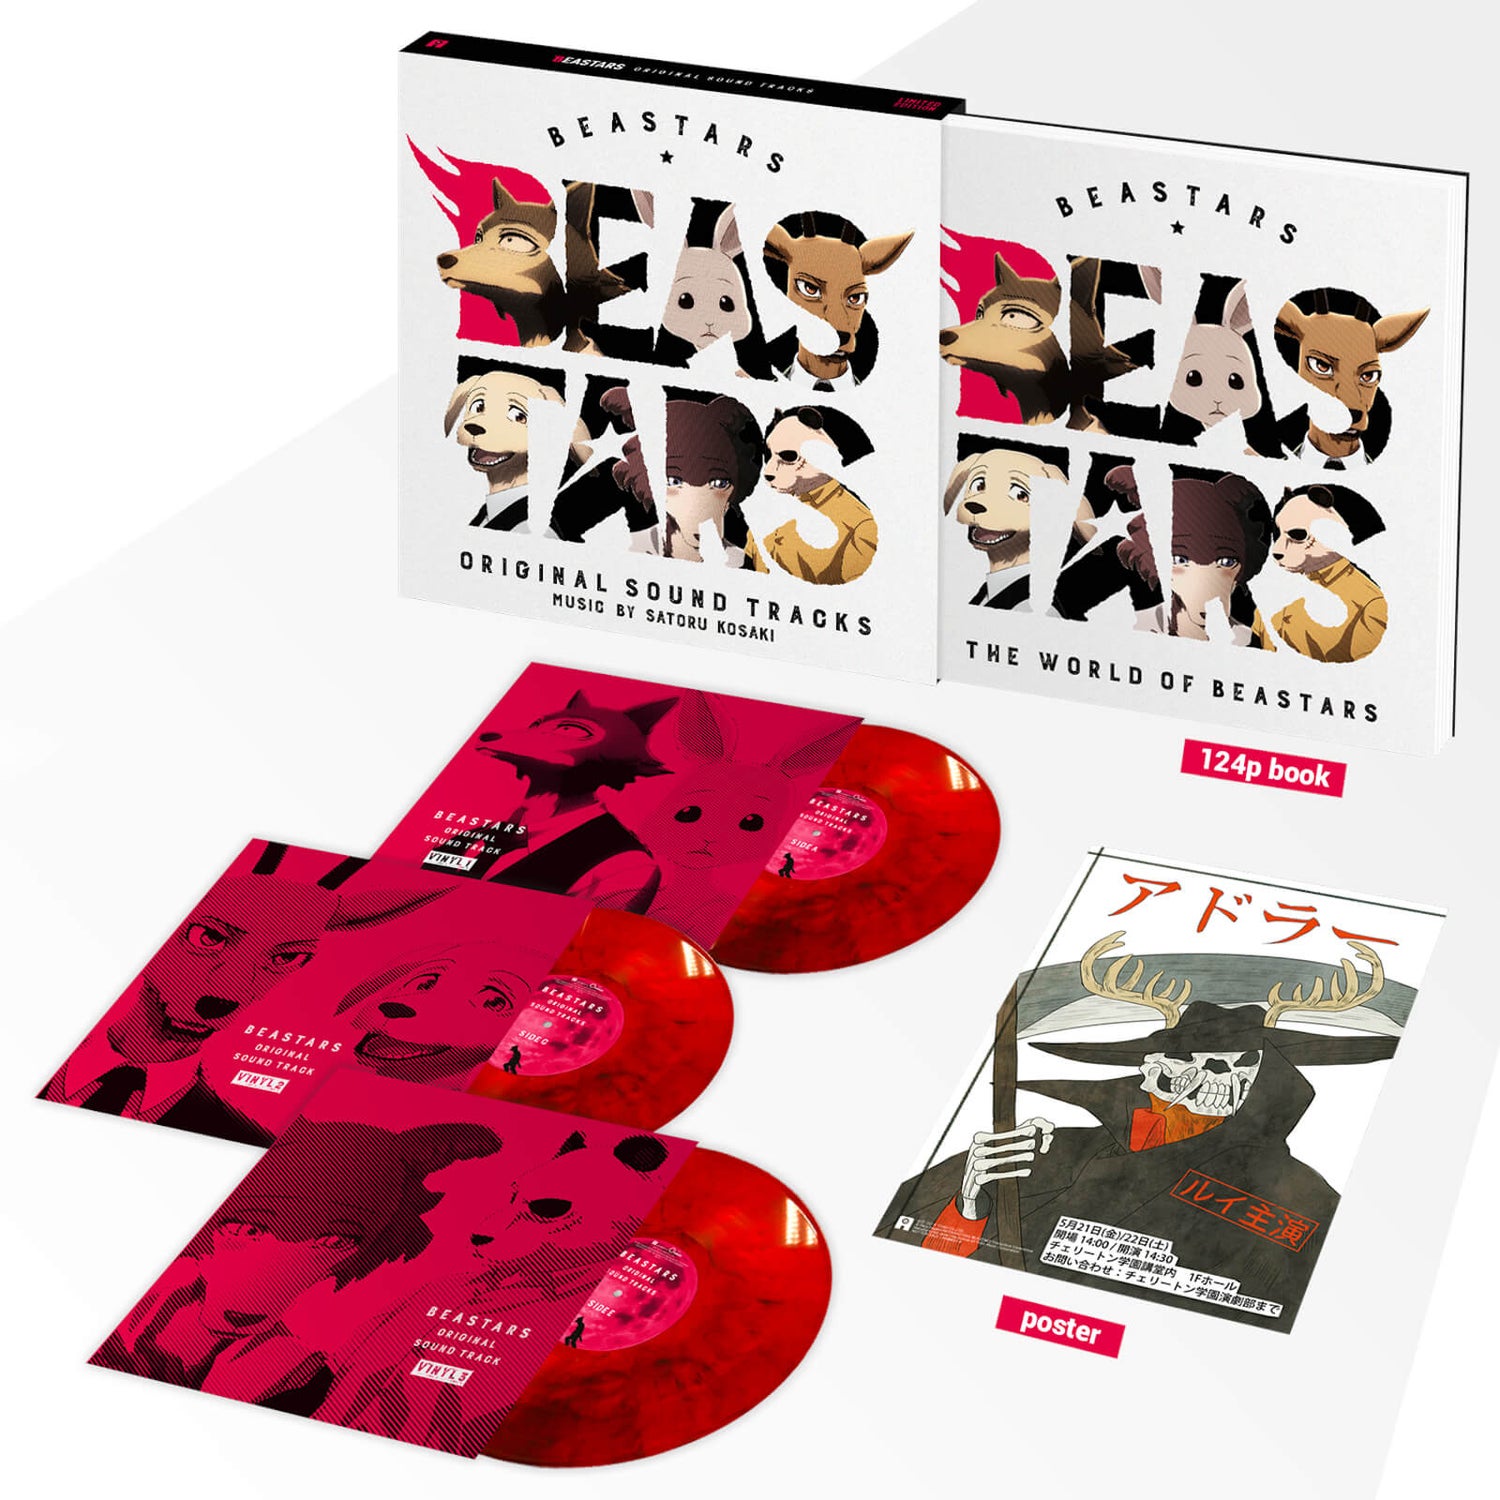 Anime Limited - Beastars (Original Soundtrack) 180g Vinyl 3LP Deluxe Edition Box Set (Zavvi Exclusive Red)